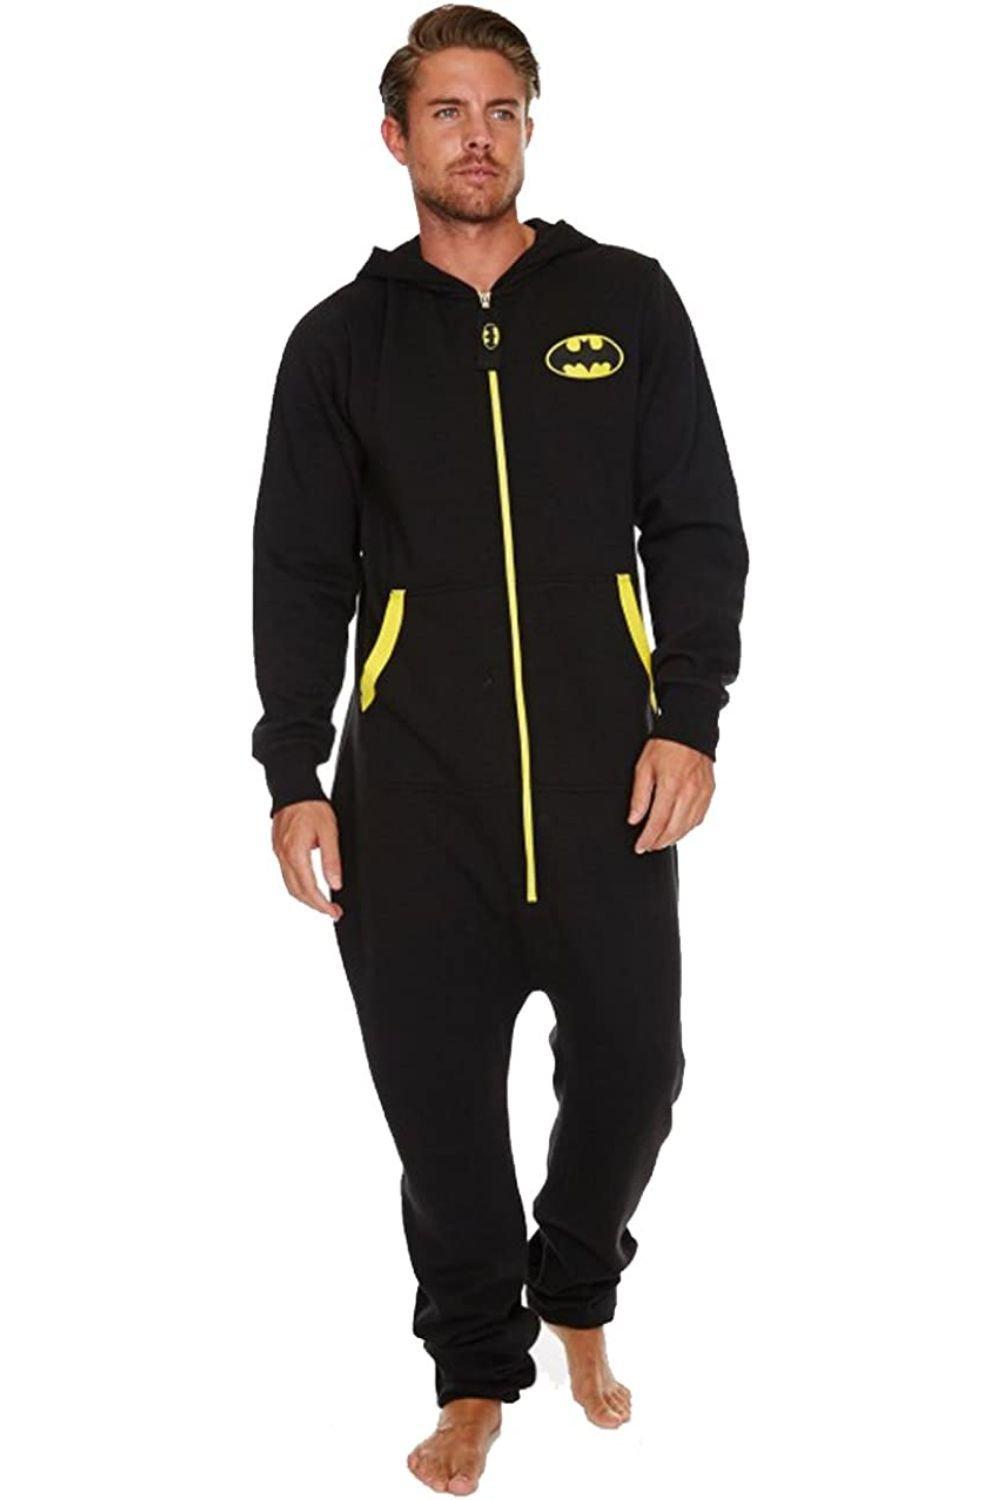 Batman Logo Black & Yellow Jumpsuit